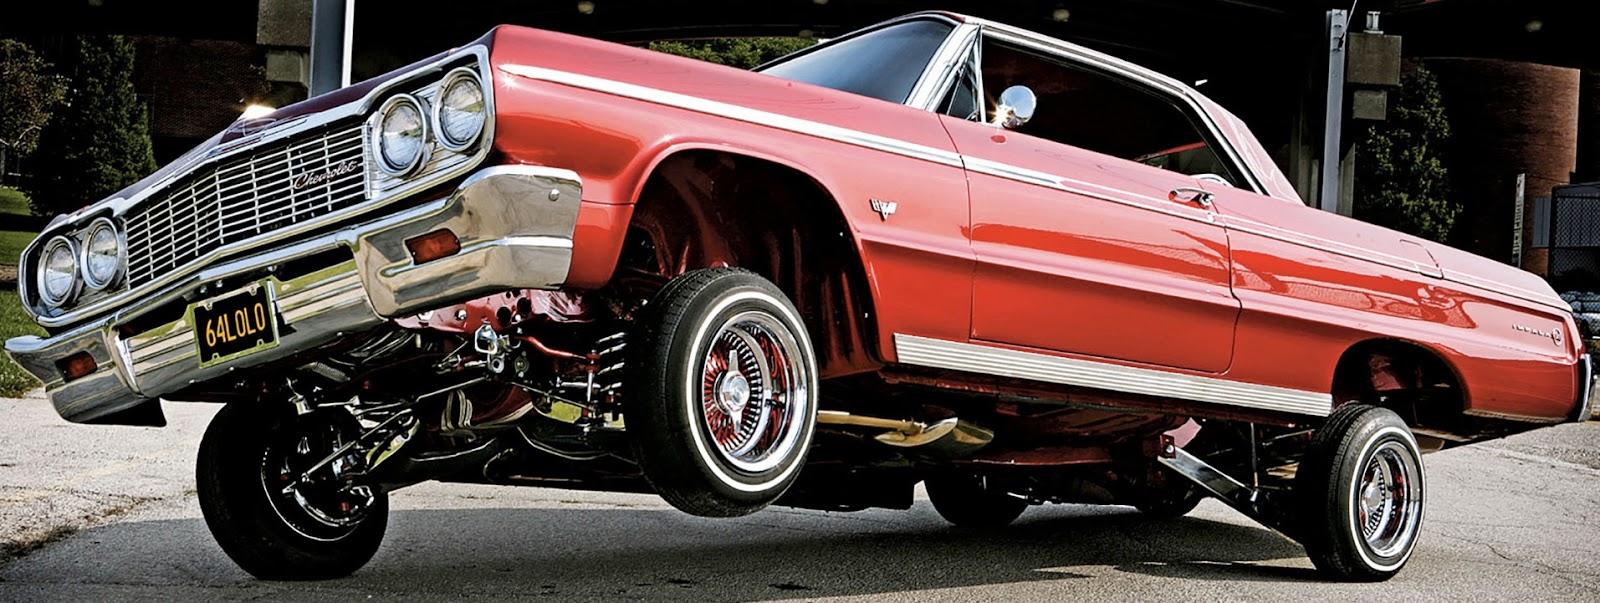 1964 Impala Lowrider Wallpaper